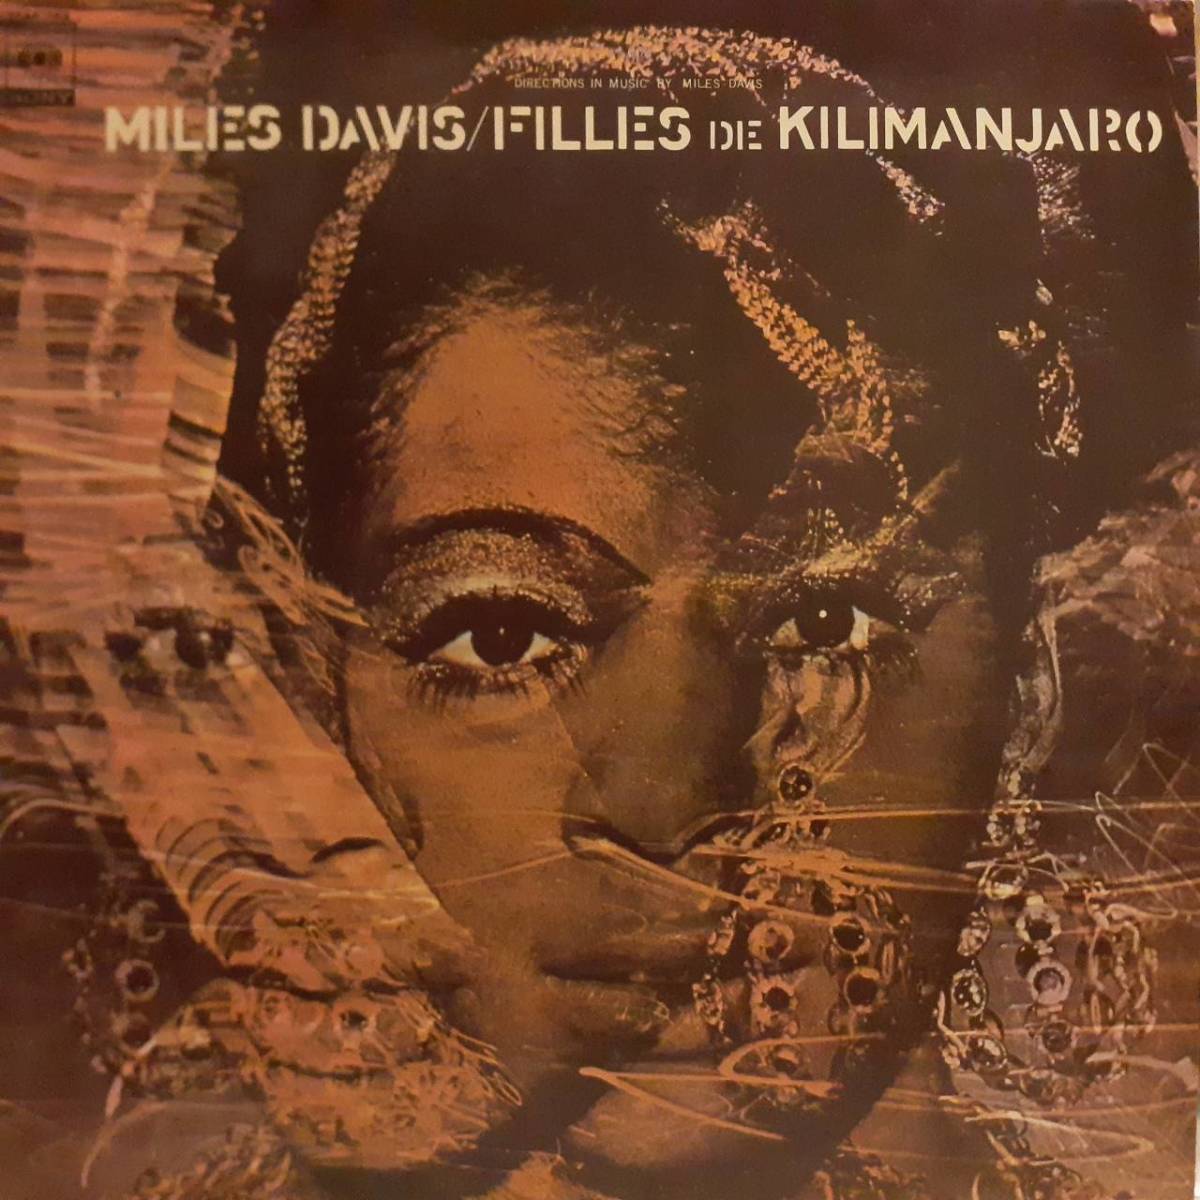 PROMO日本盤LP 見本盤 白ラベル Miles Davis / Filles De Kilimanjaro 1977年 CBS SONY 25AP 769 マイルス・デイヴィス キリマンジャロの娘_画像2